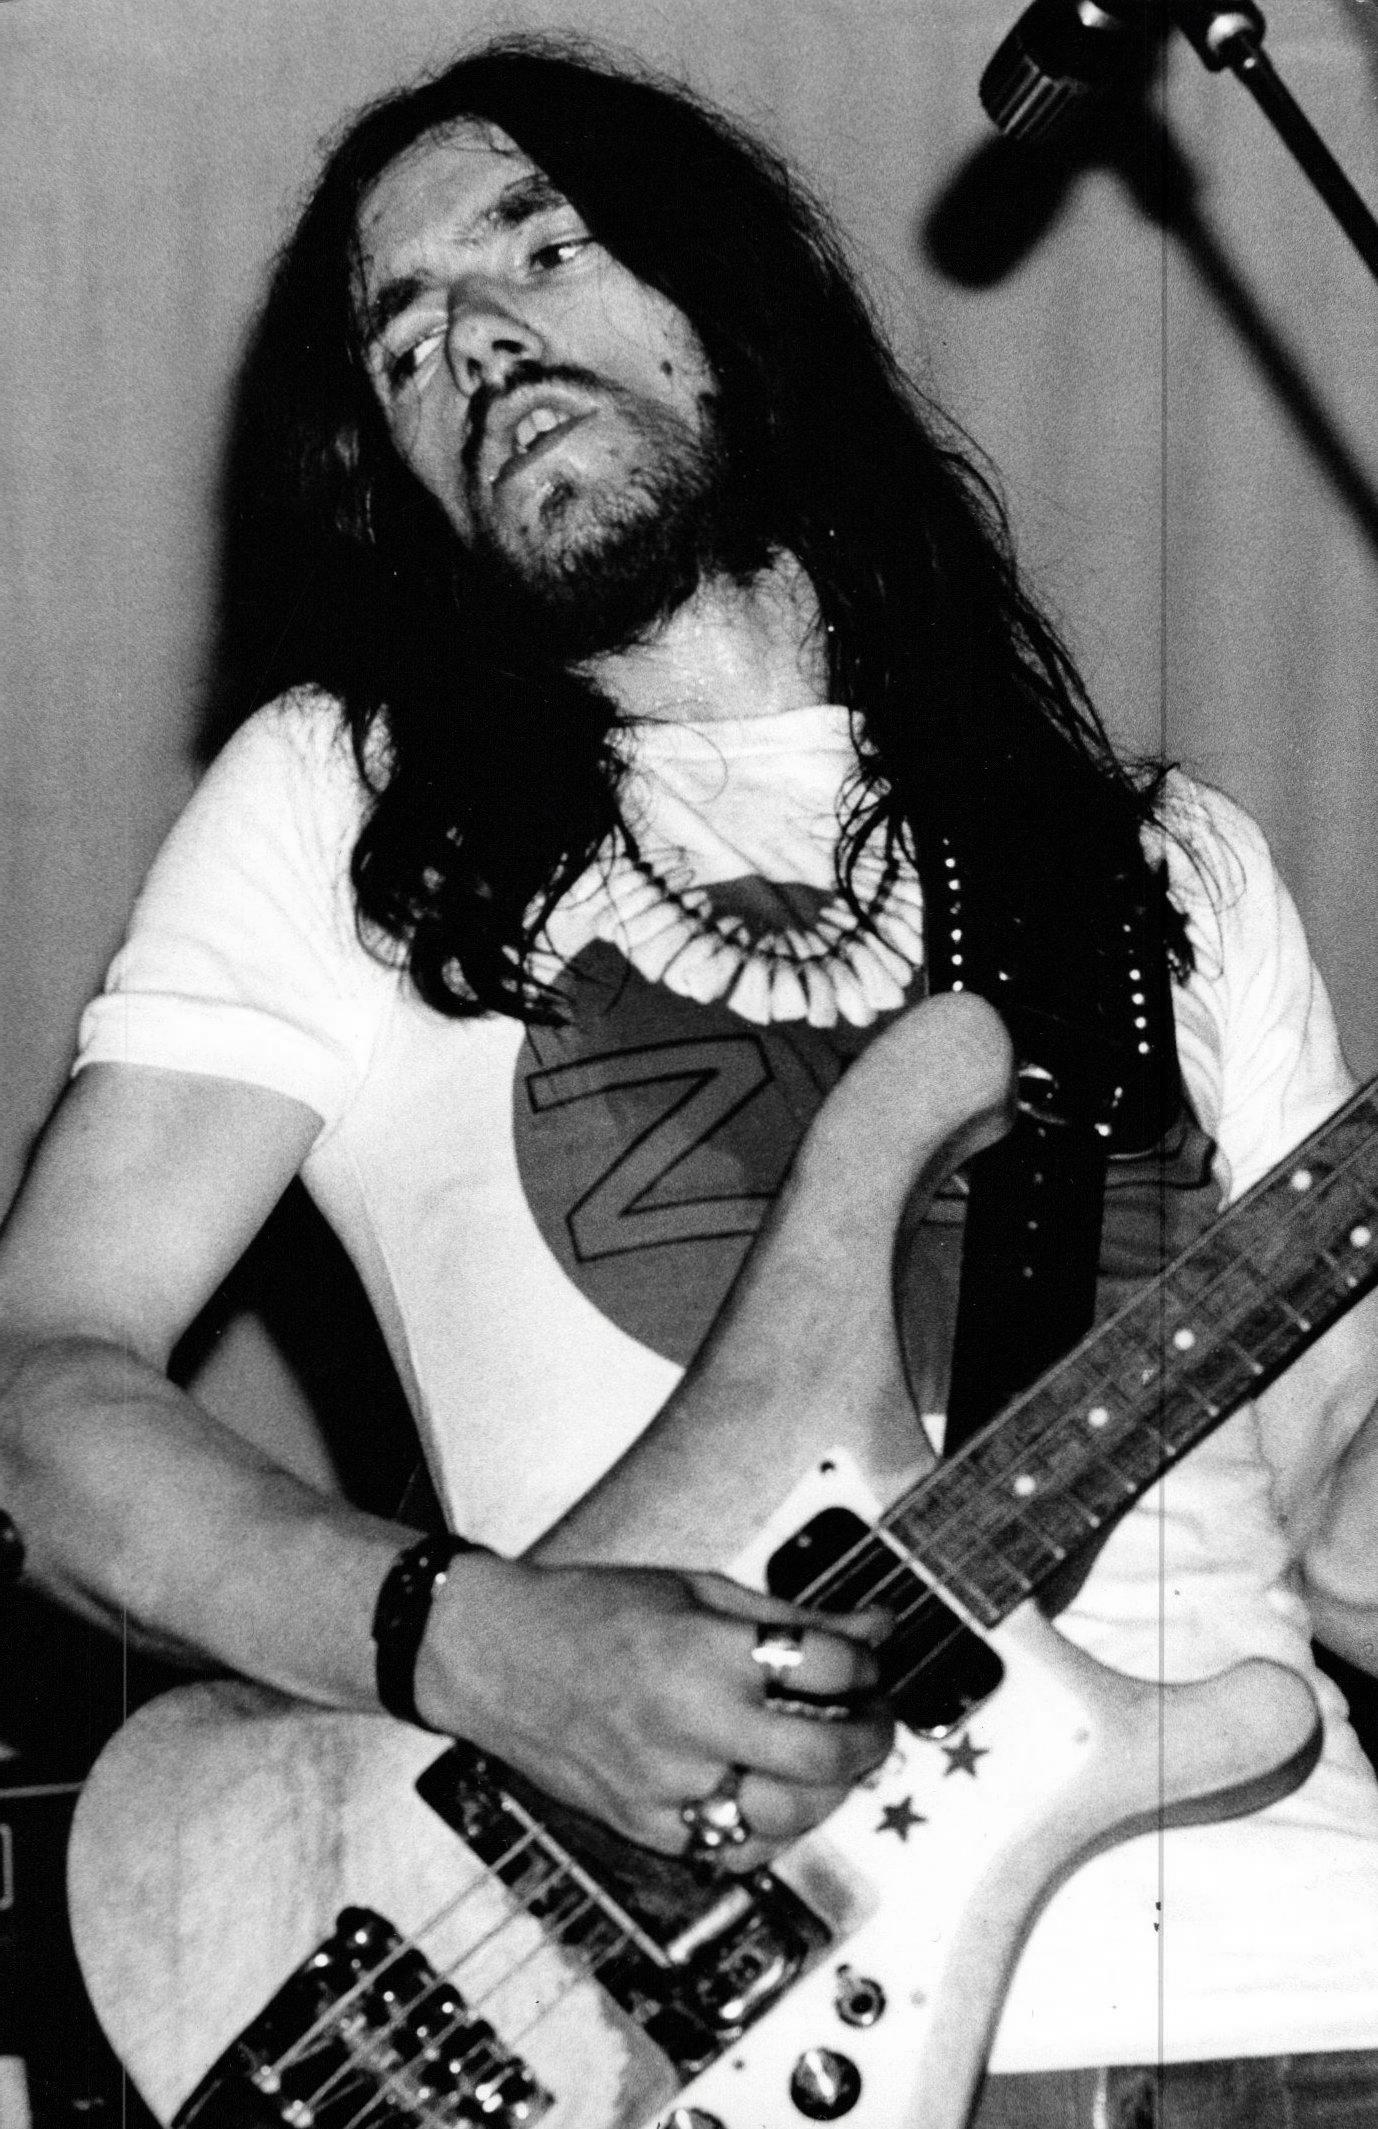 Pieter Mazel Portrait Photograph – Lemmy Kilmister of Motörhead Playing Guitar Vintage Original Photograph